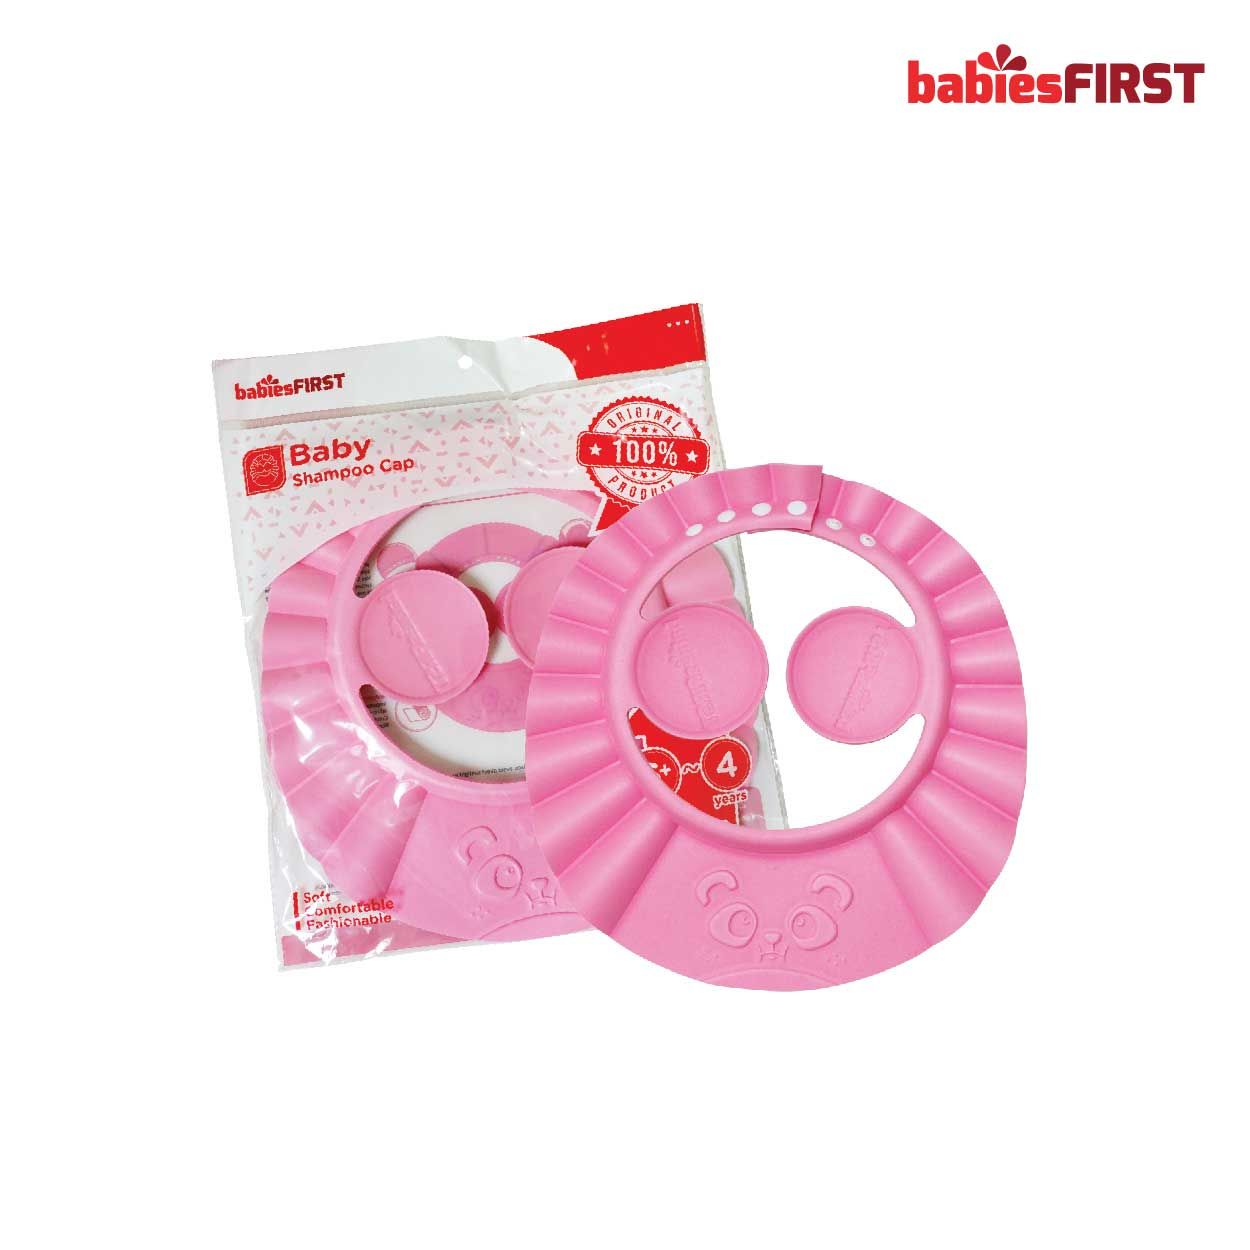 Babiesfirst Baby Shampoo Cap Pink - 4